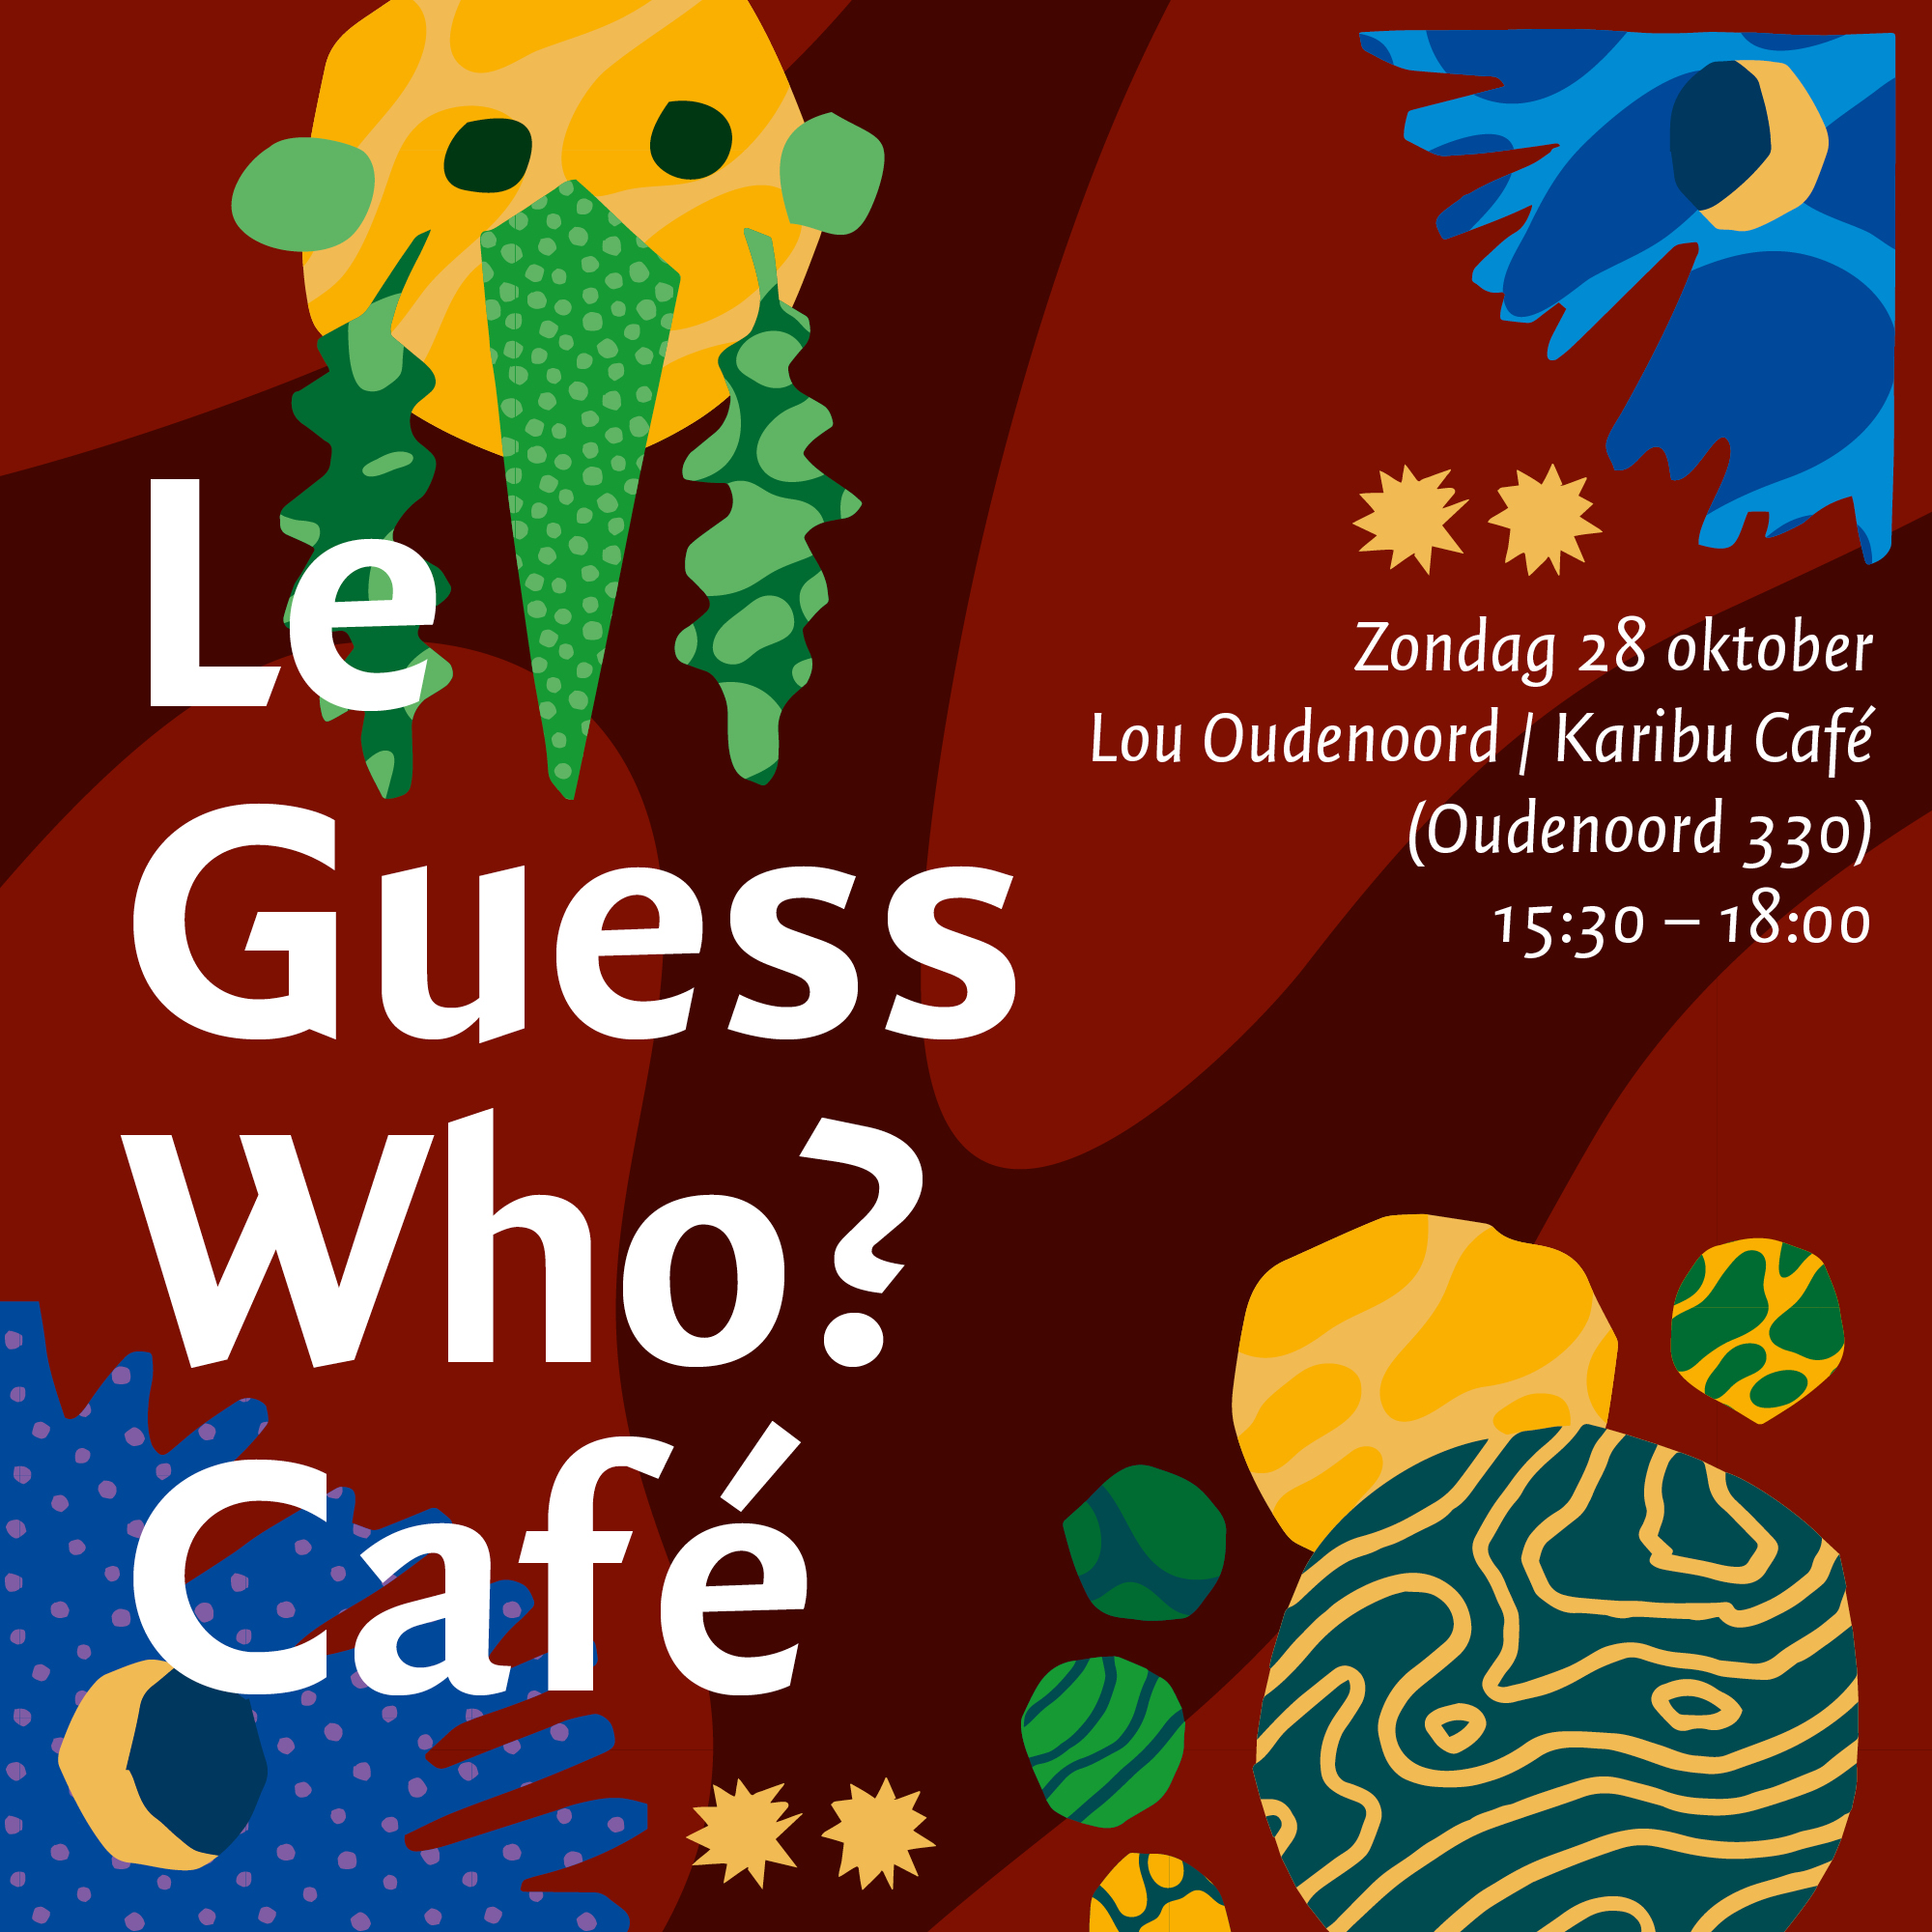 Le Guess Who? Café: zondag 28 oktober in Lou Oudenoord / Karibu